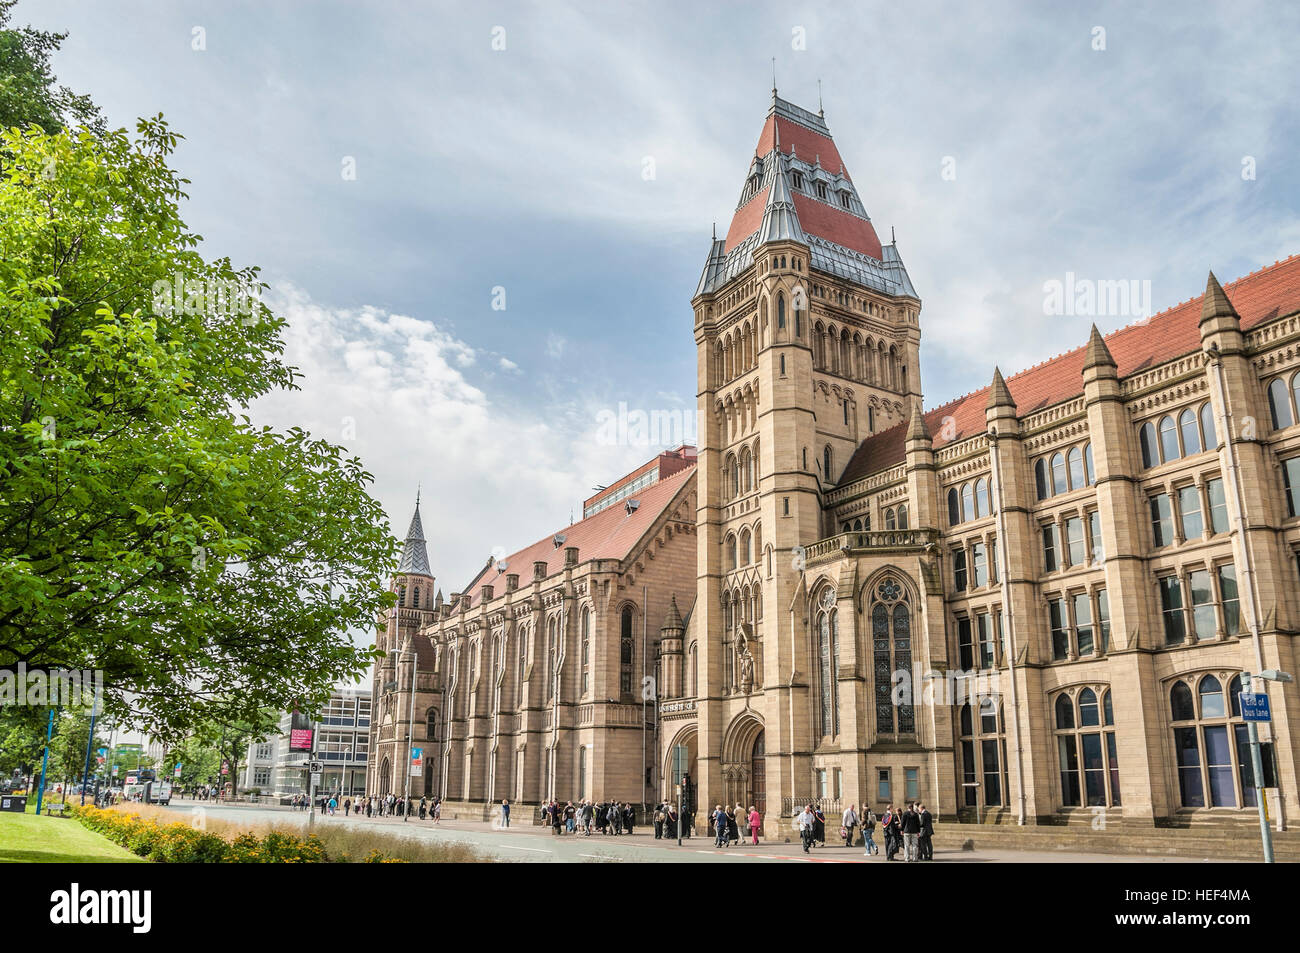 The Old Quadrangle Building of the University of Manchester, England, UK Stock Photo